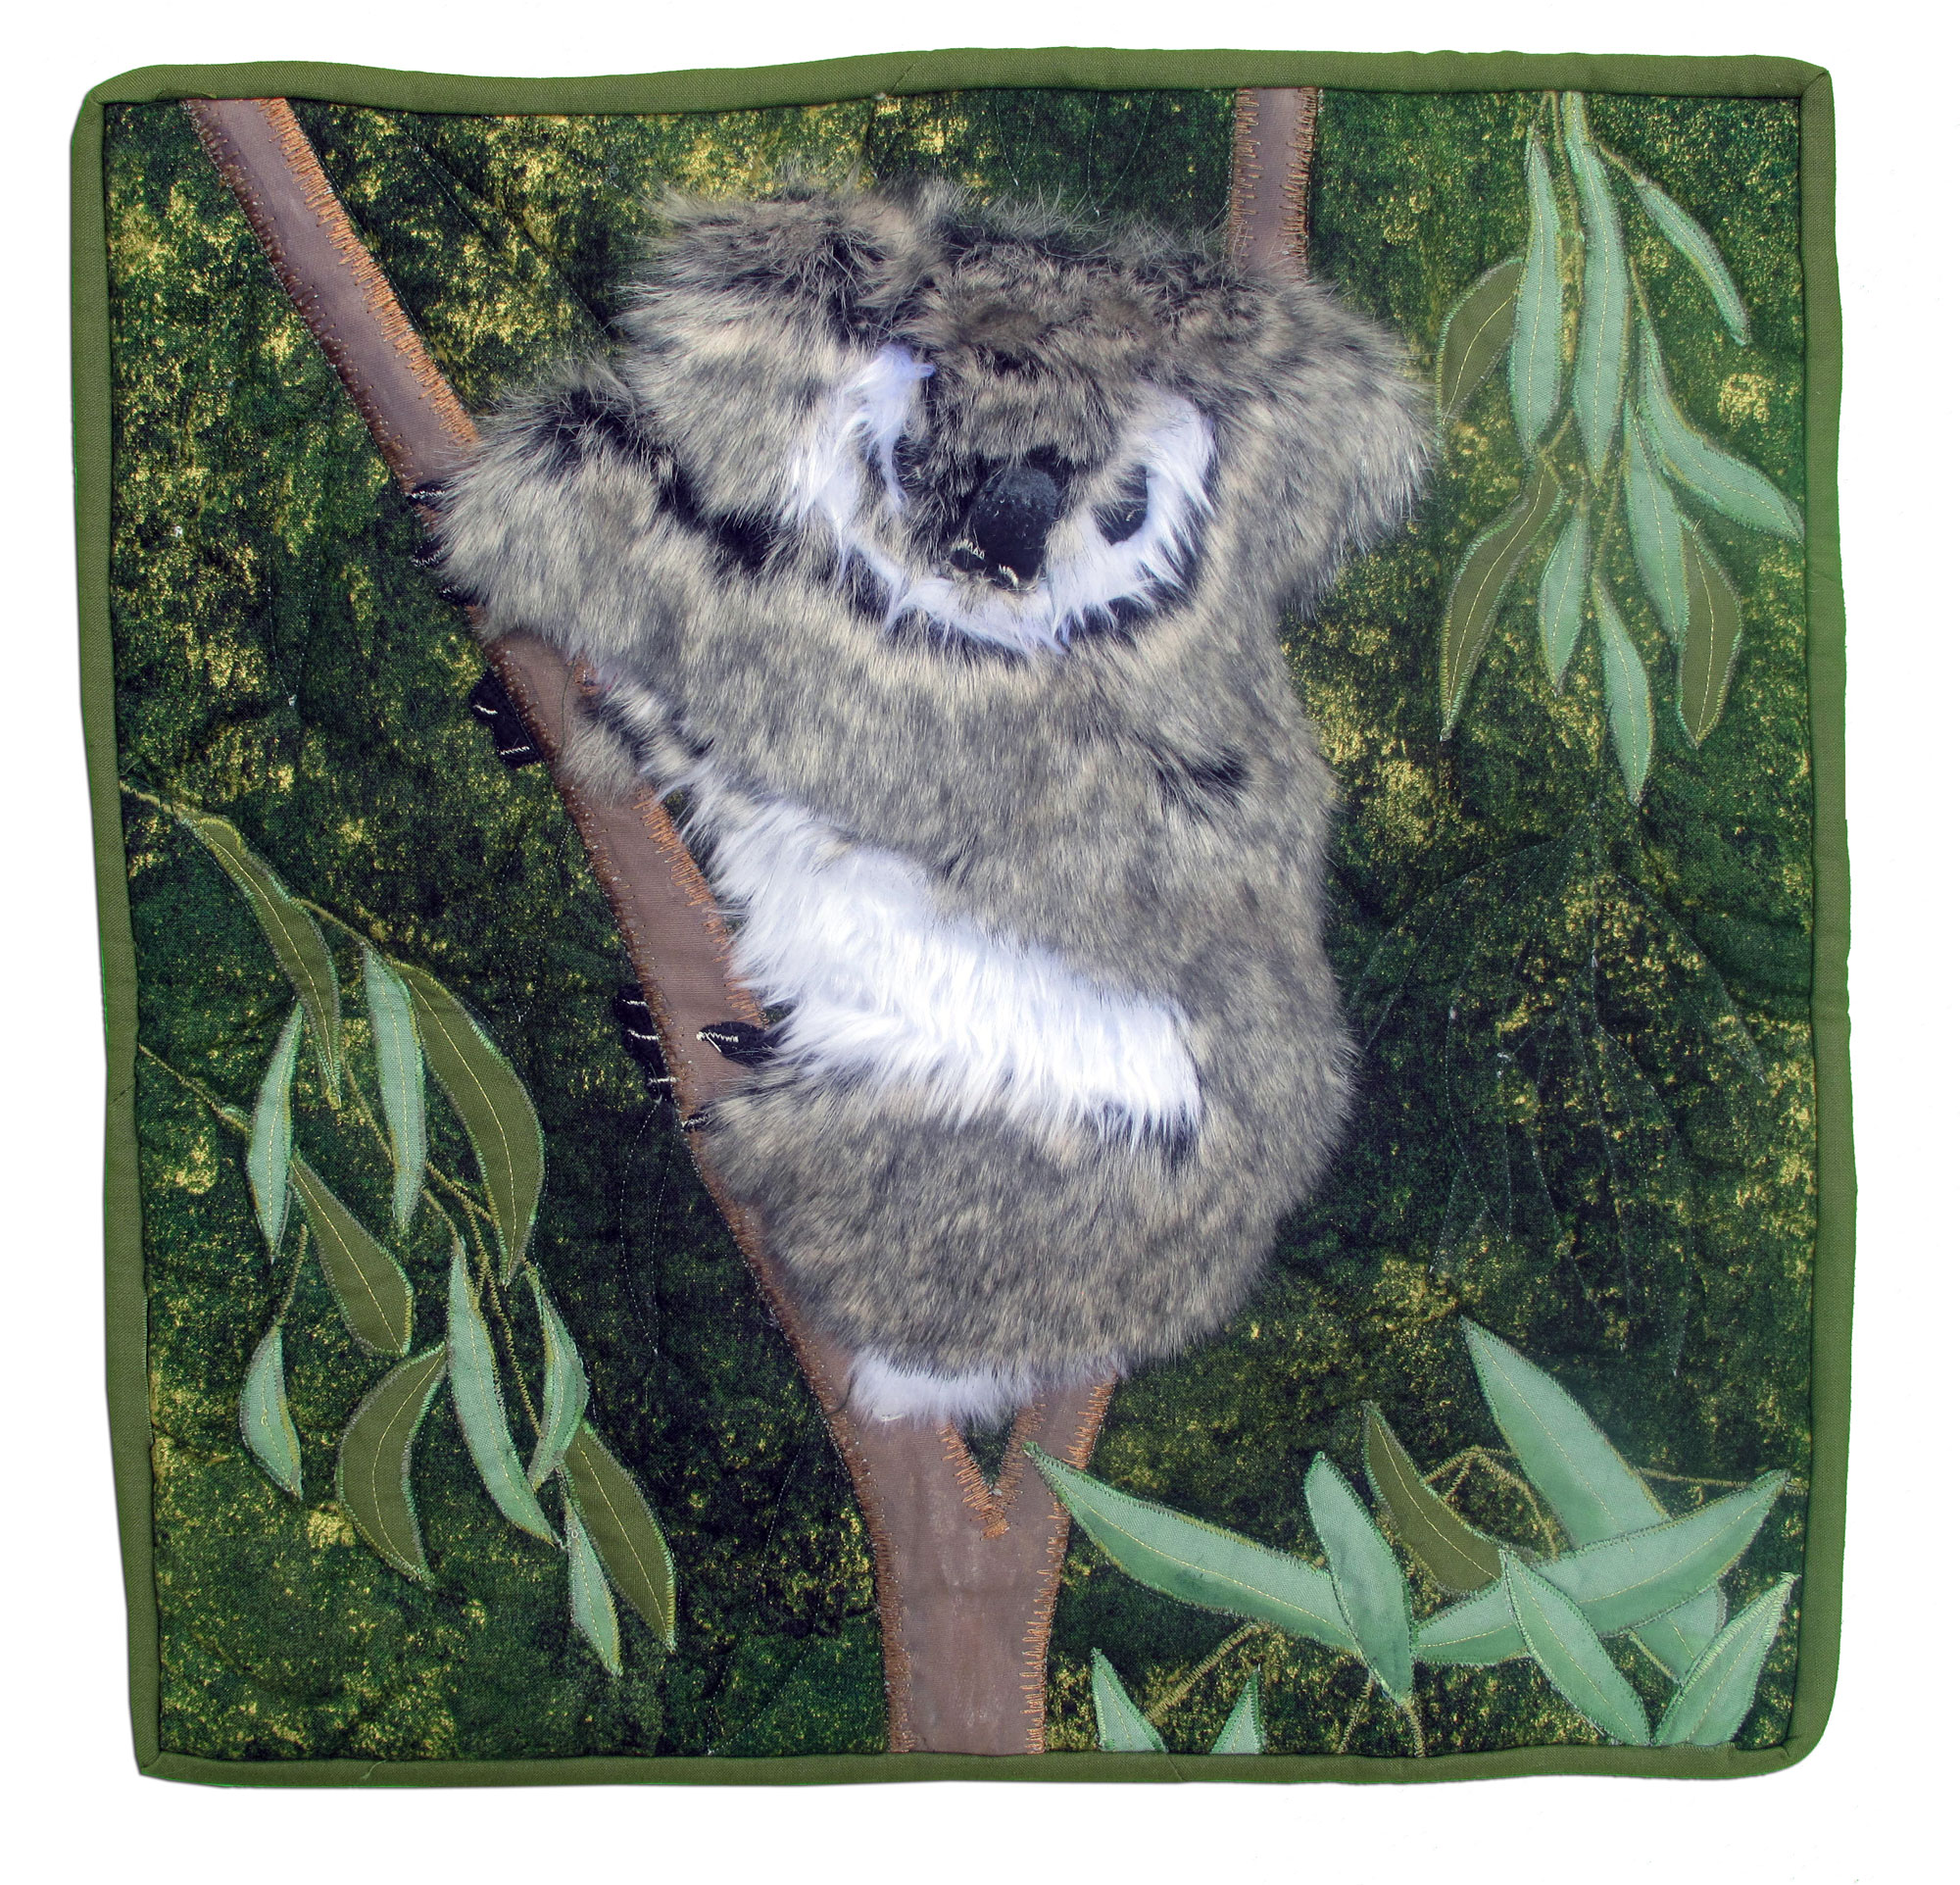 Cuddly Koala, Desley M. Drevins, Albany Creek, Queensland, Australia